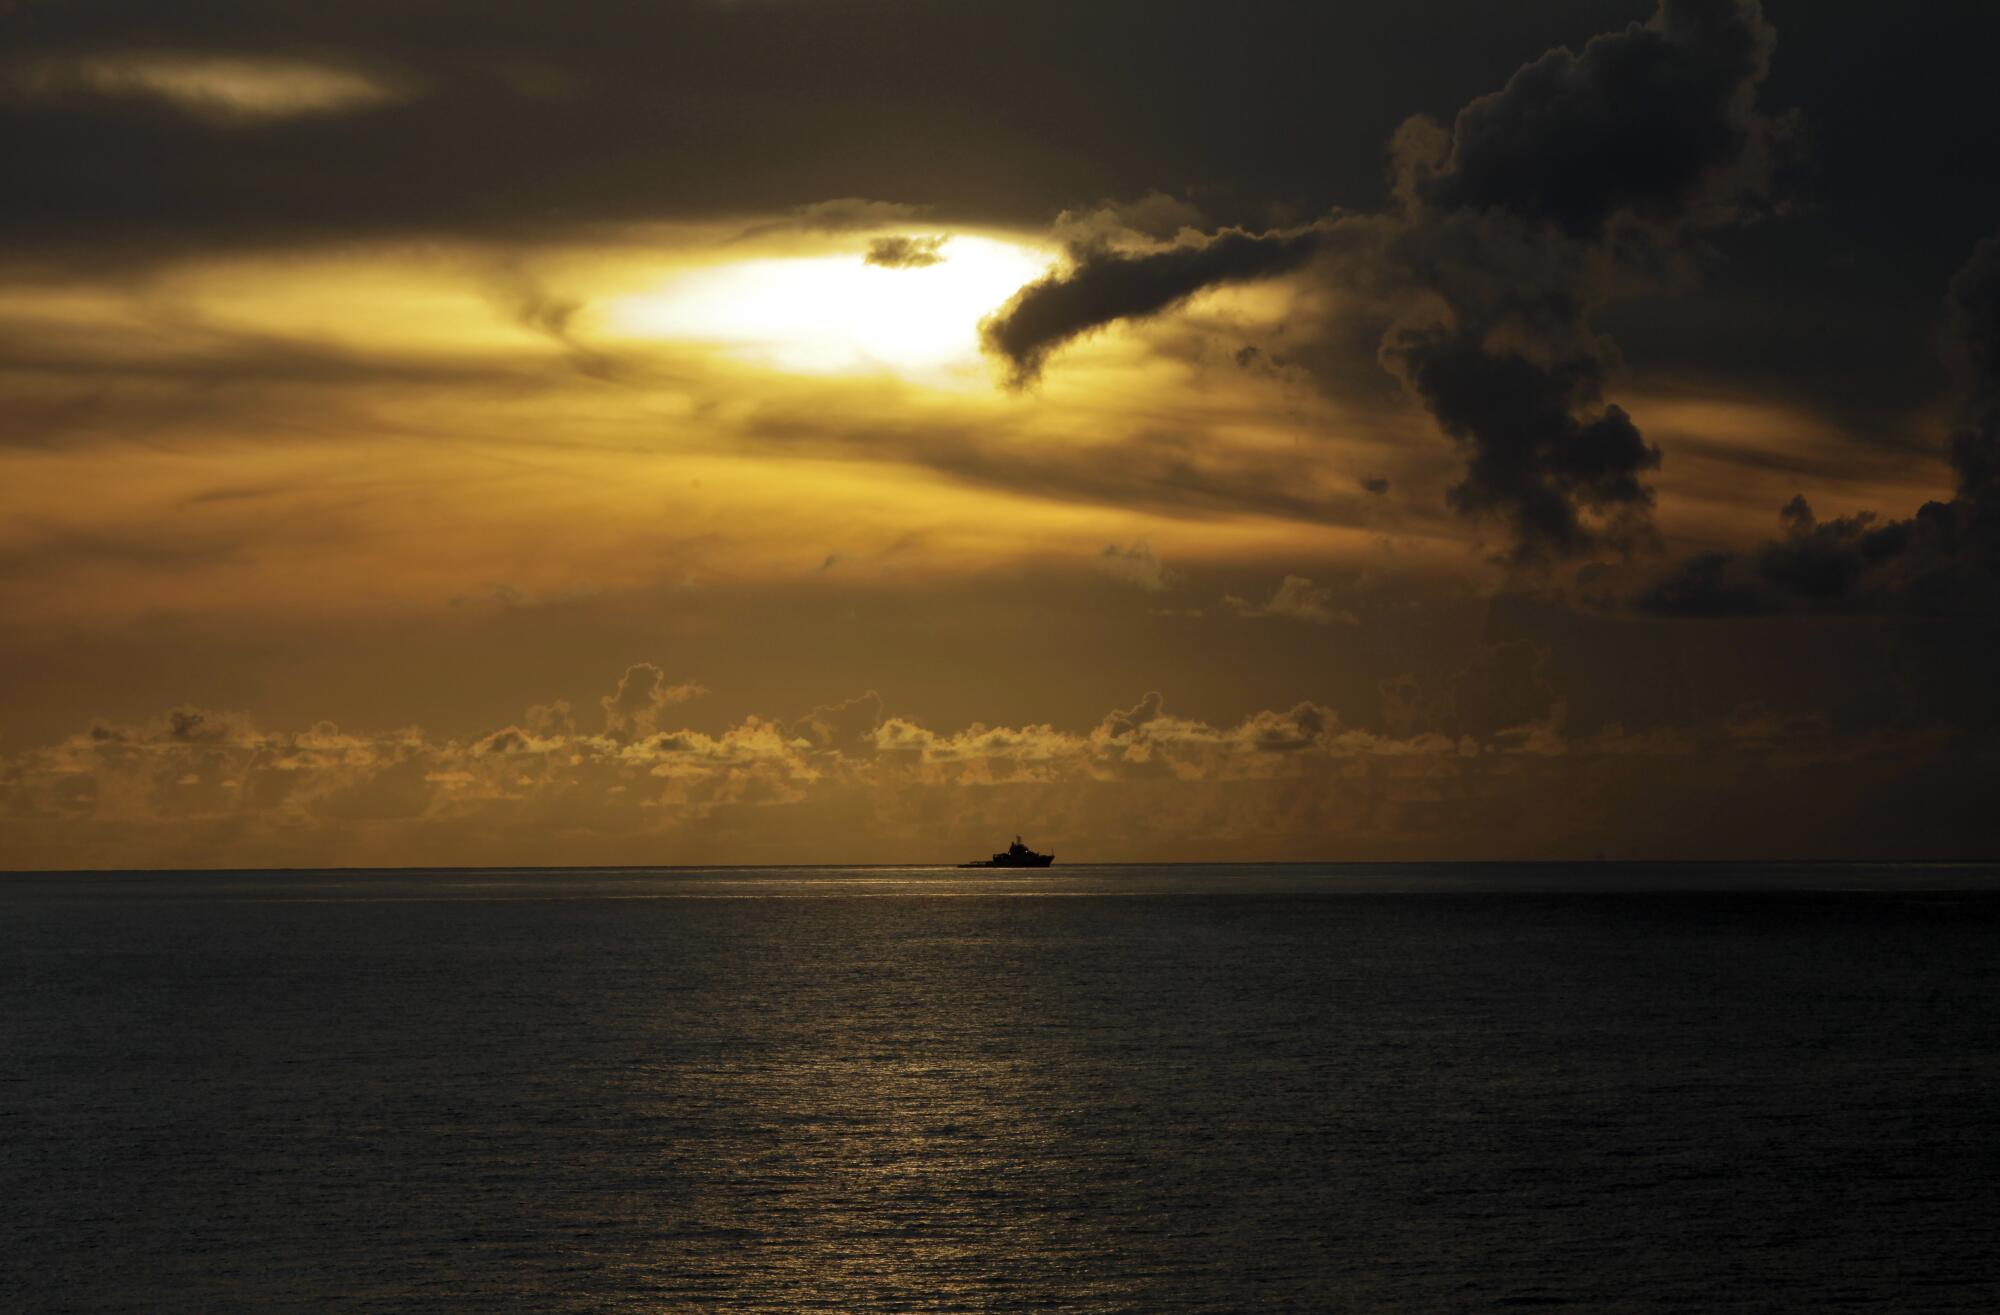 A ship far off on the horizon under a darkening yellow-orange sky